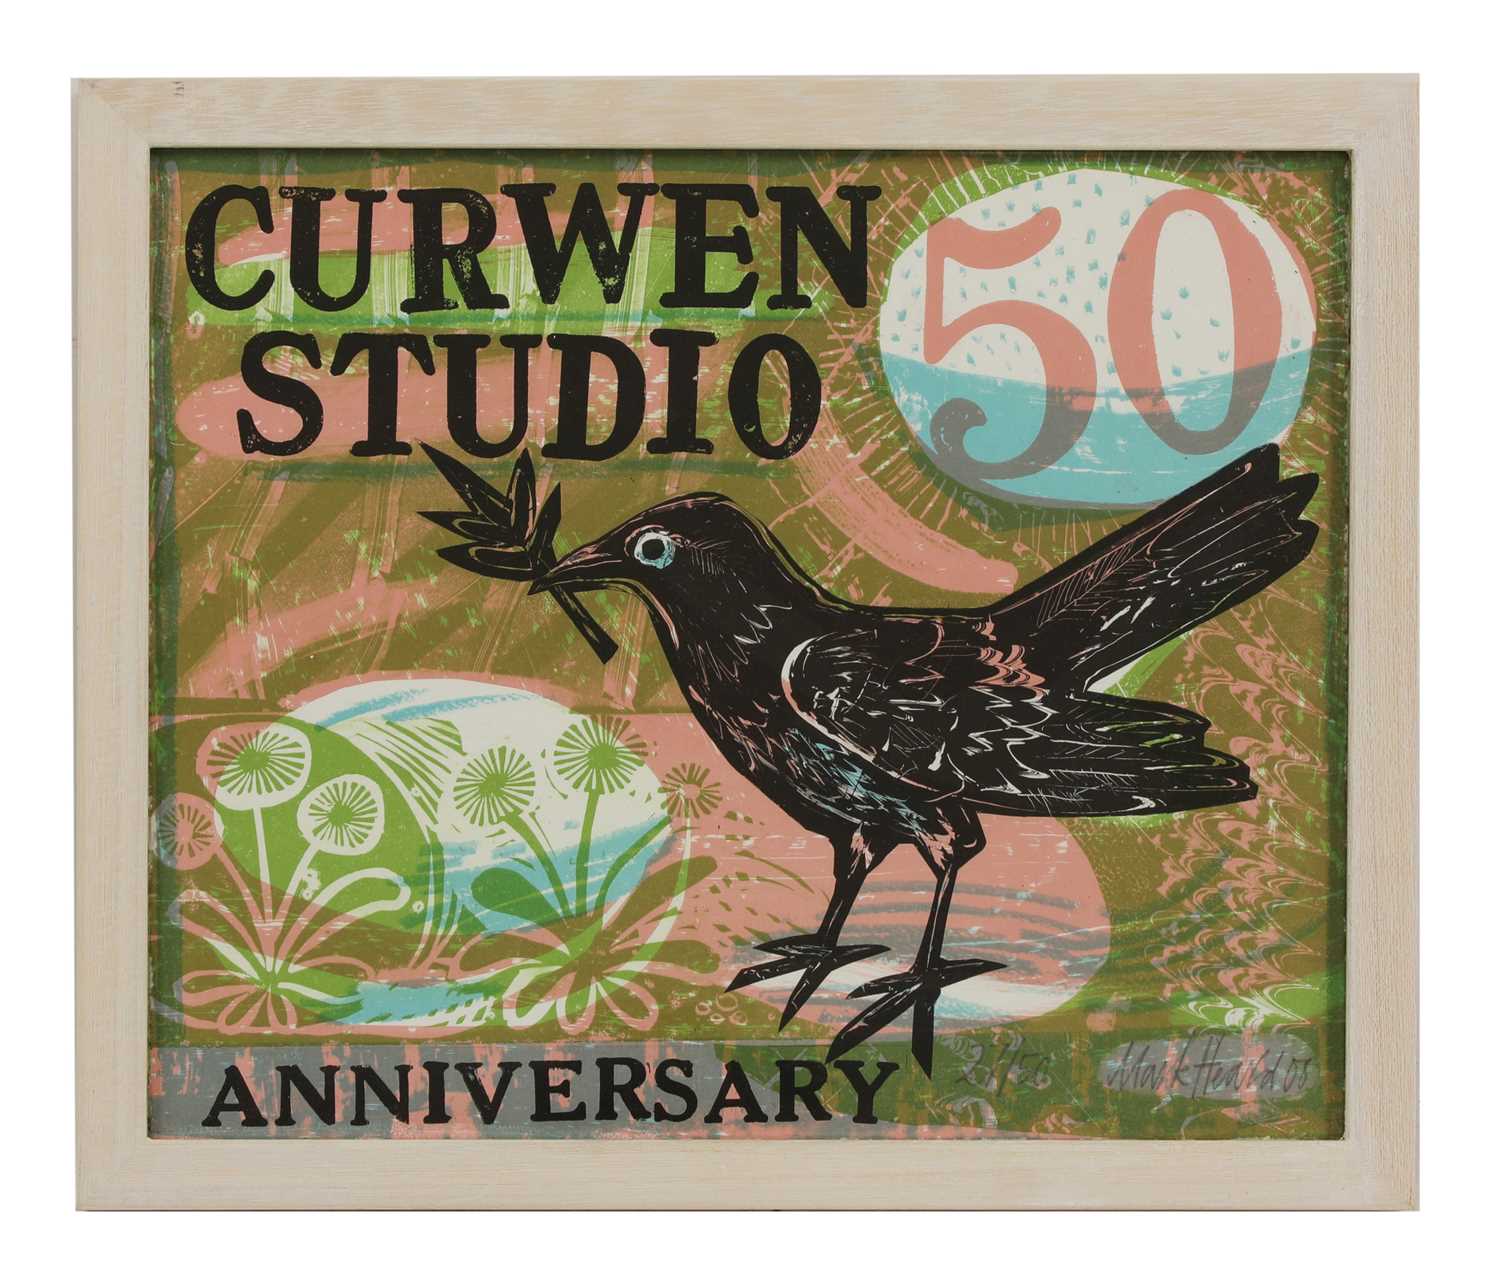 Lot 172 - The Curwen Studio